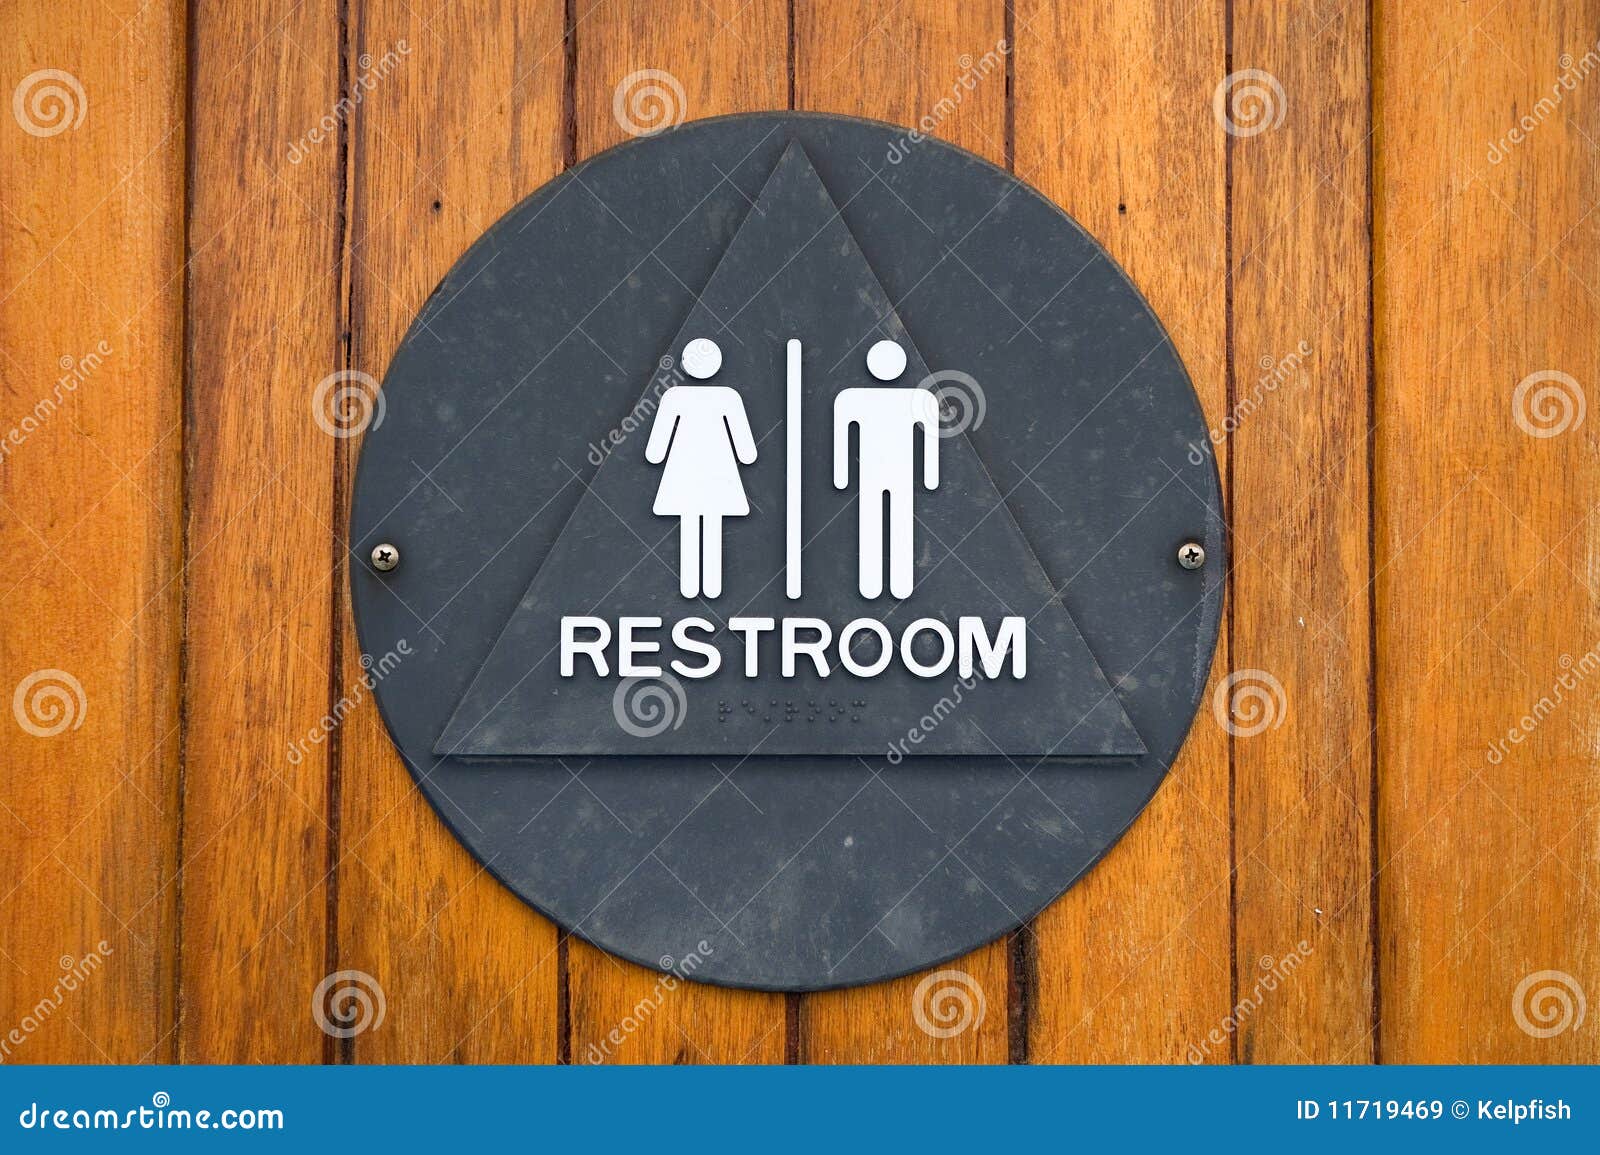 brass restroom sign